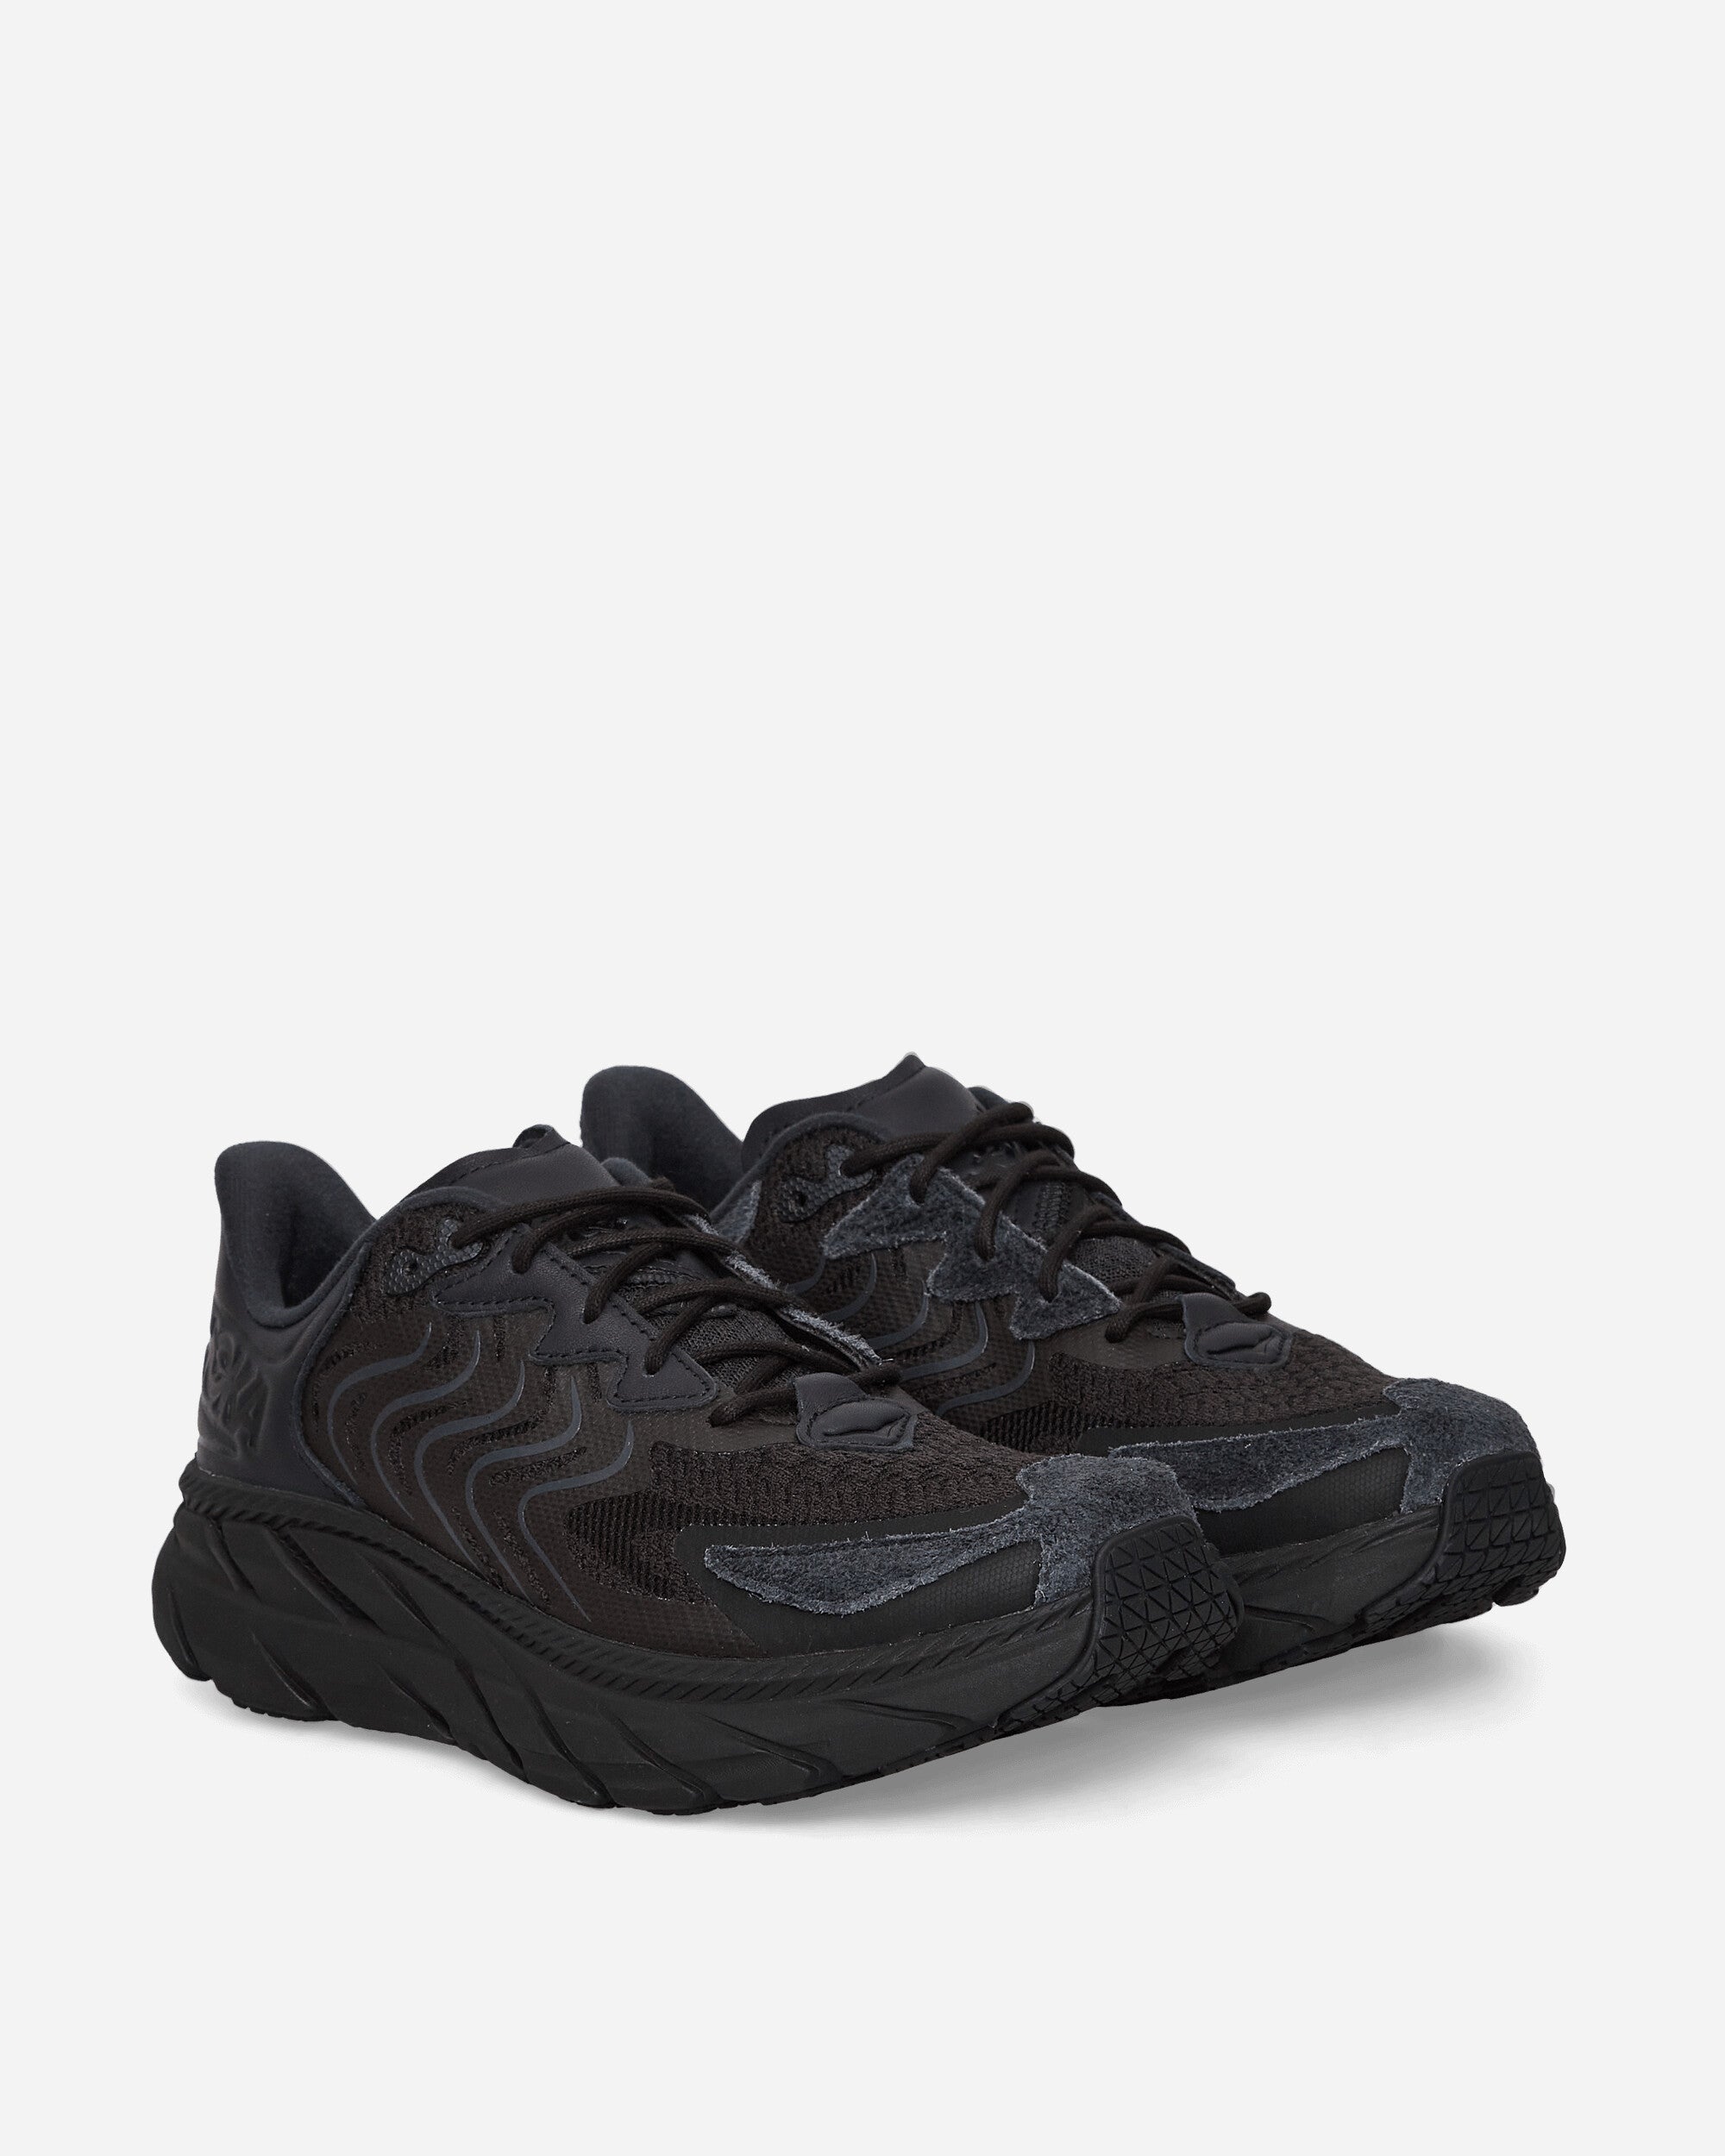 Clifton LS Sneakers Black / Asphalt